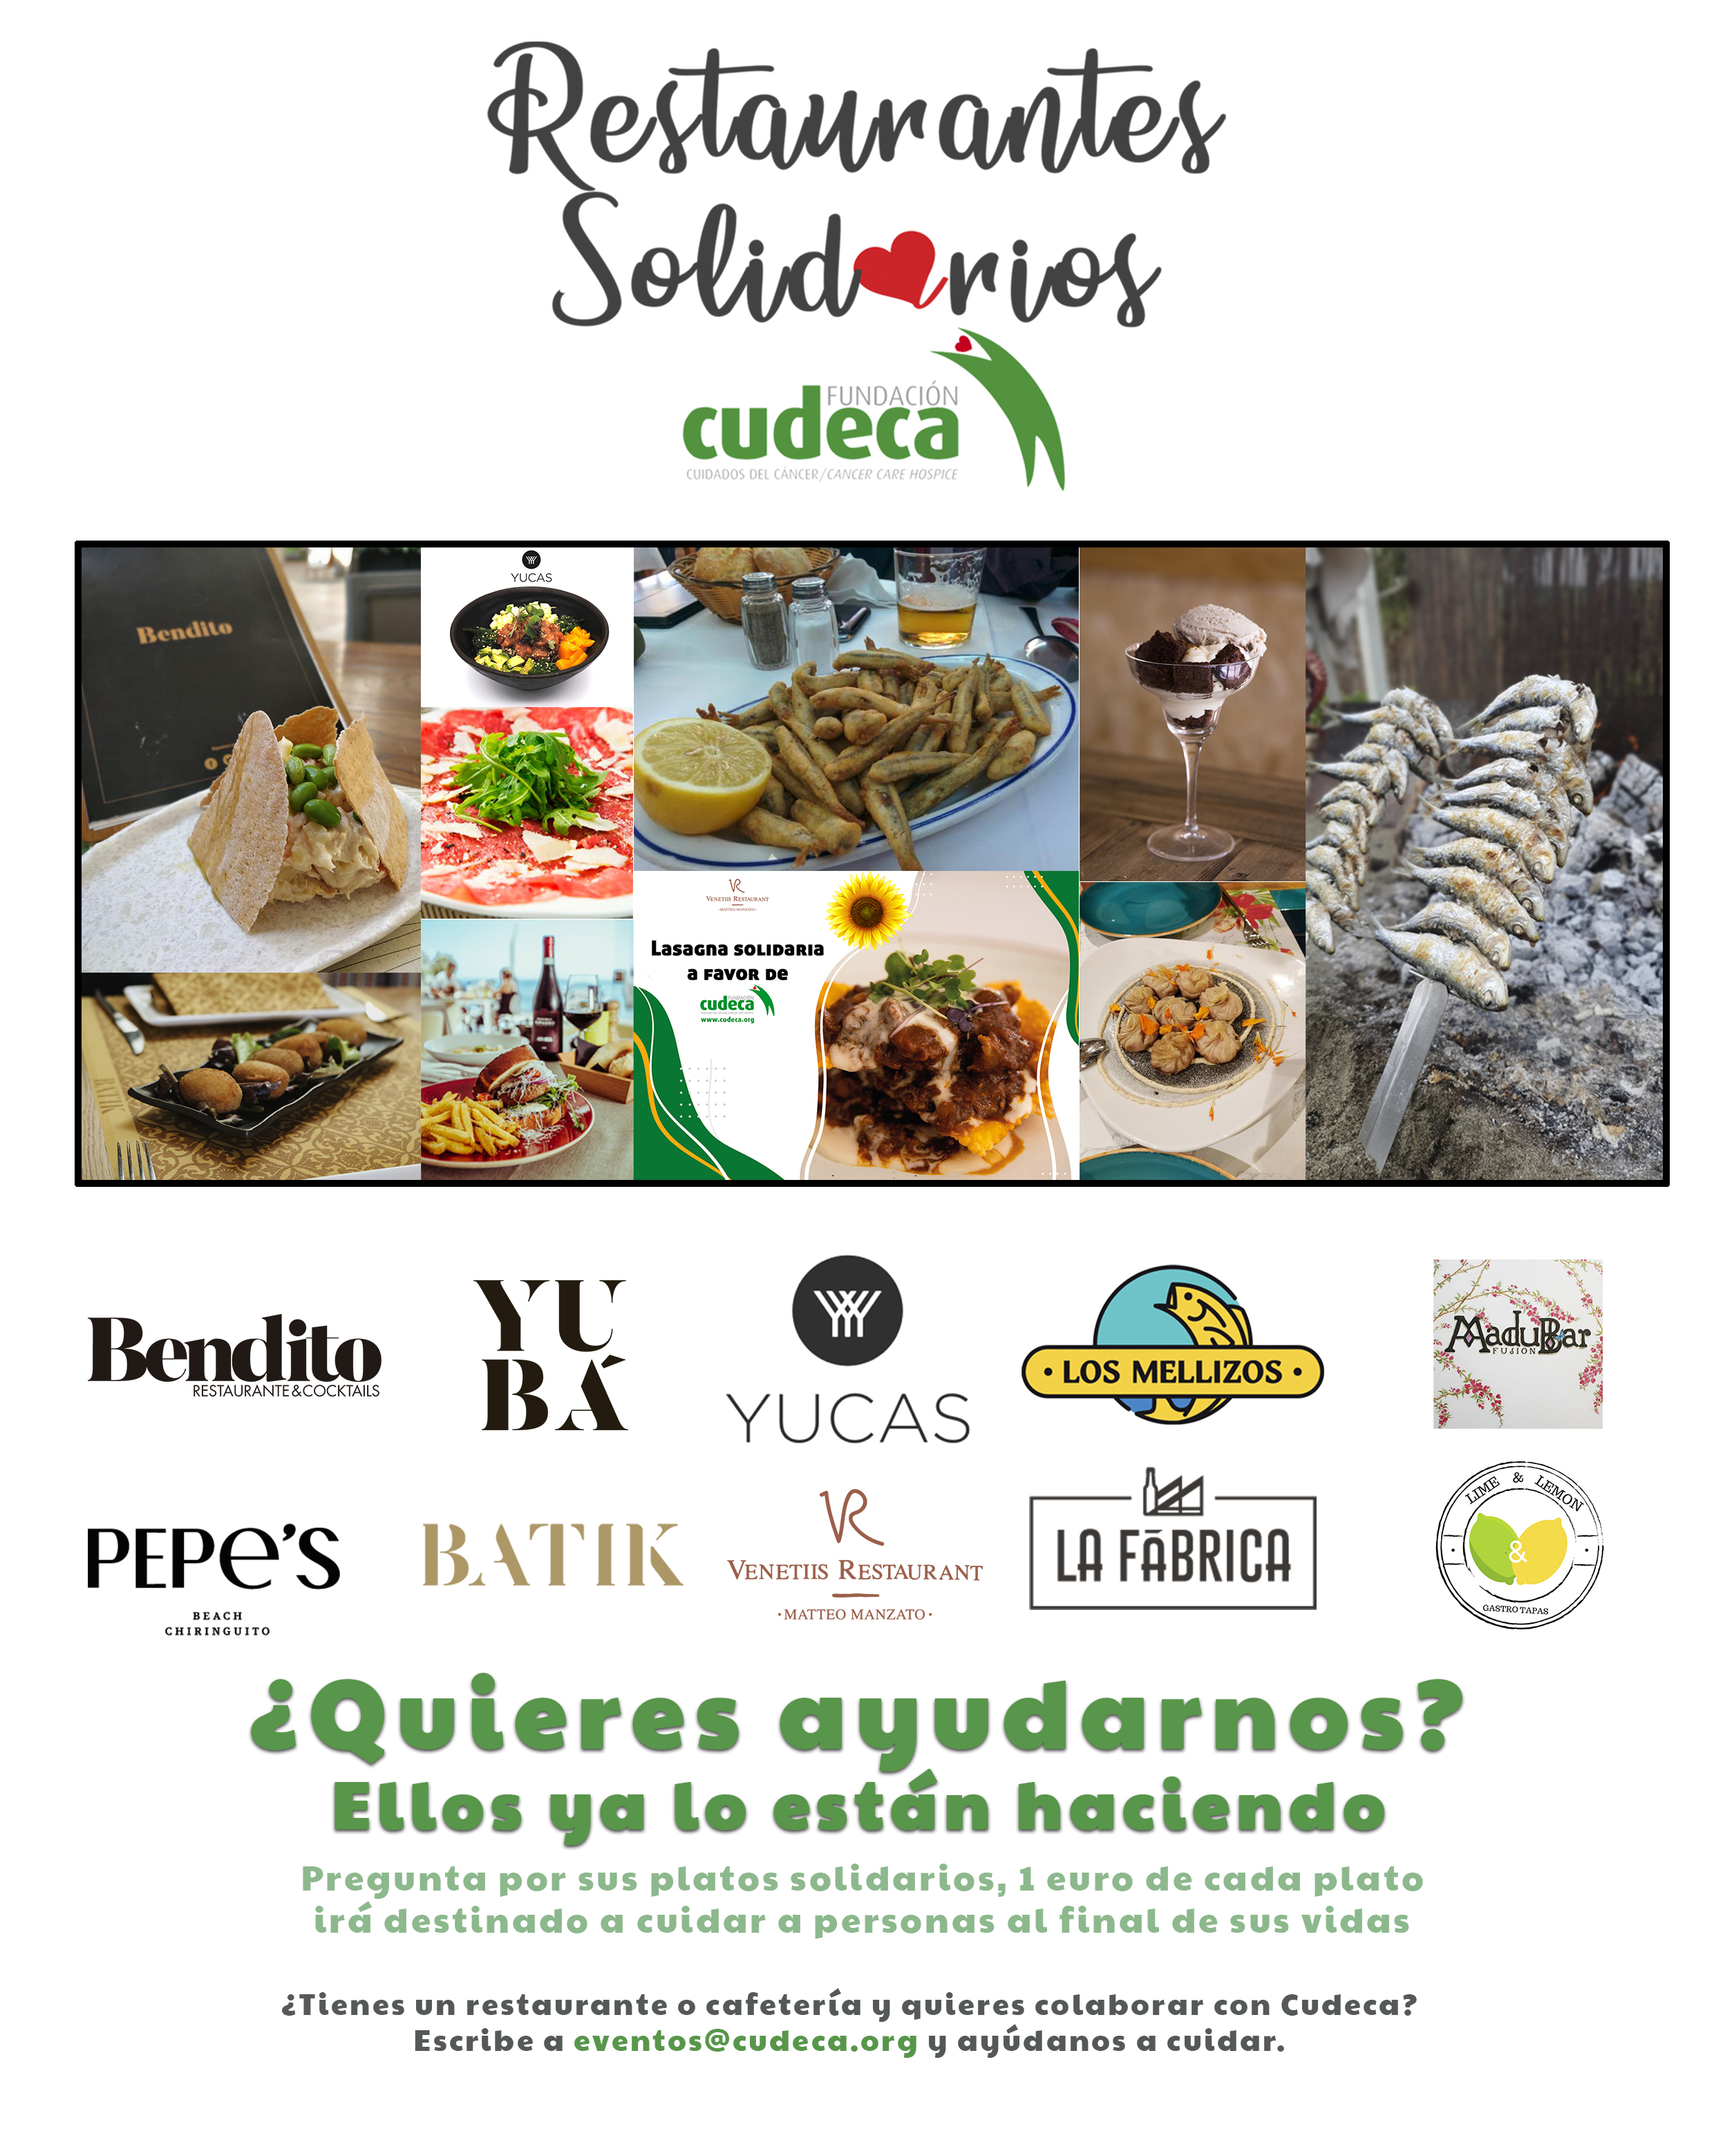 Solidarity Restaurants in aid of Cudeca